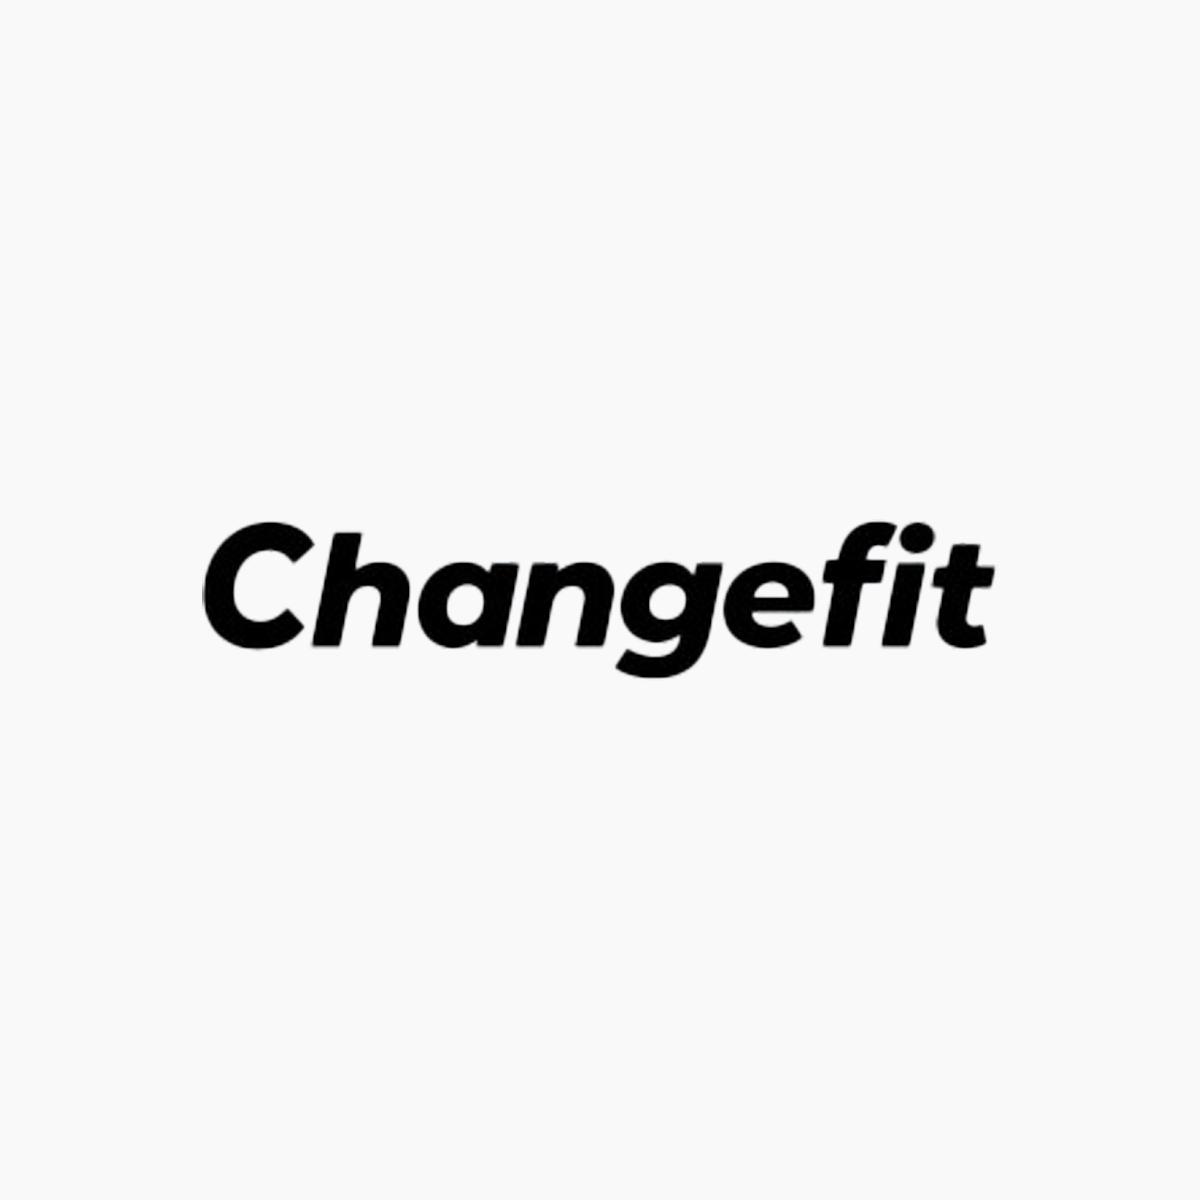 Change Fit